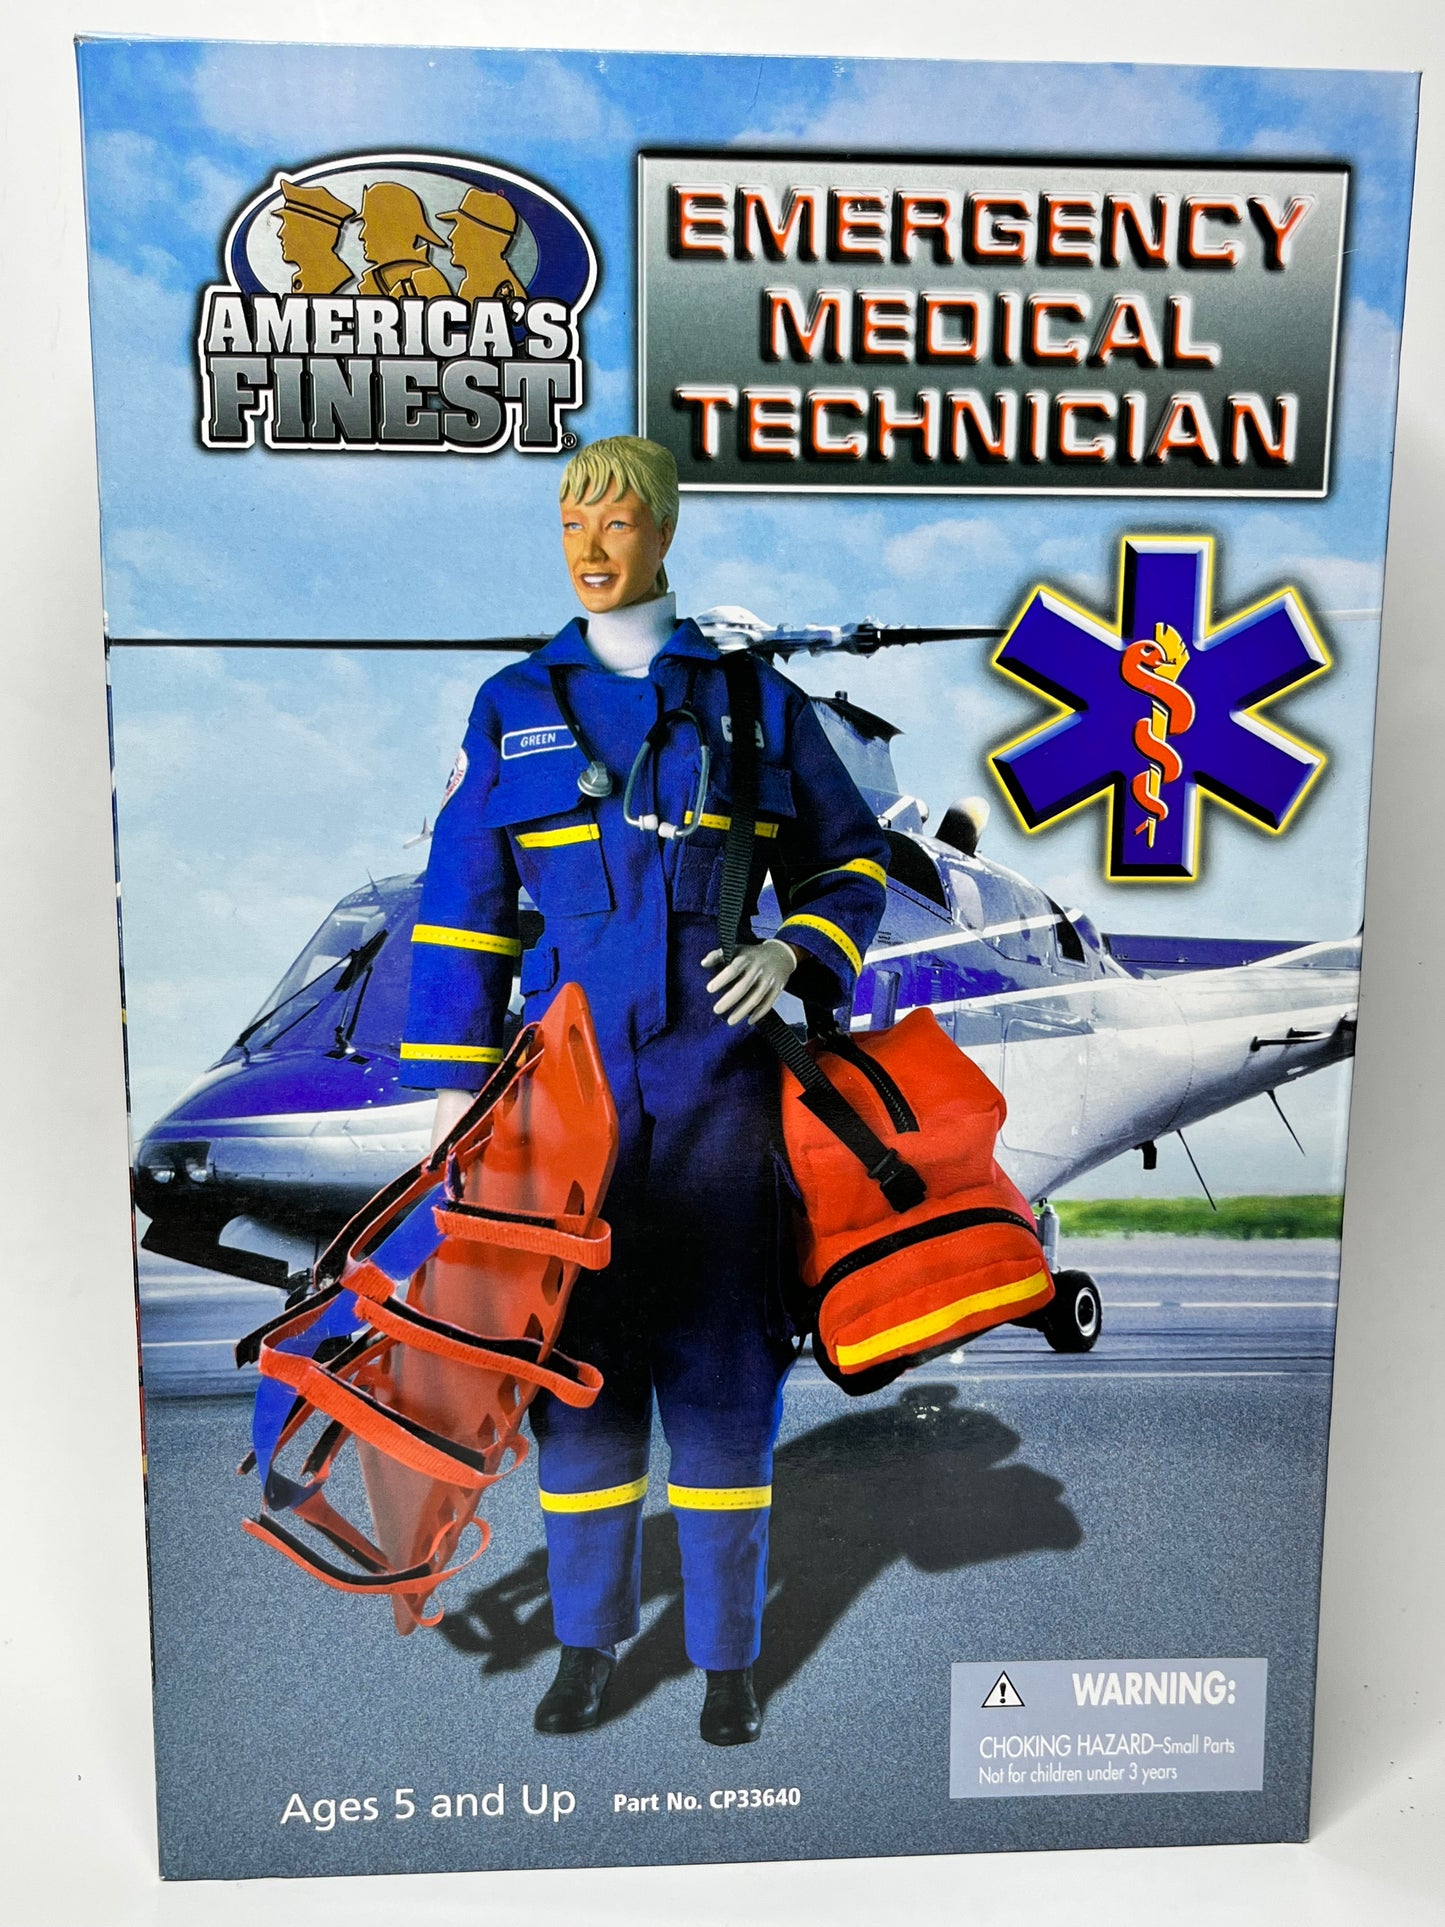 America’s Finest Emergency Medical Technician